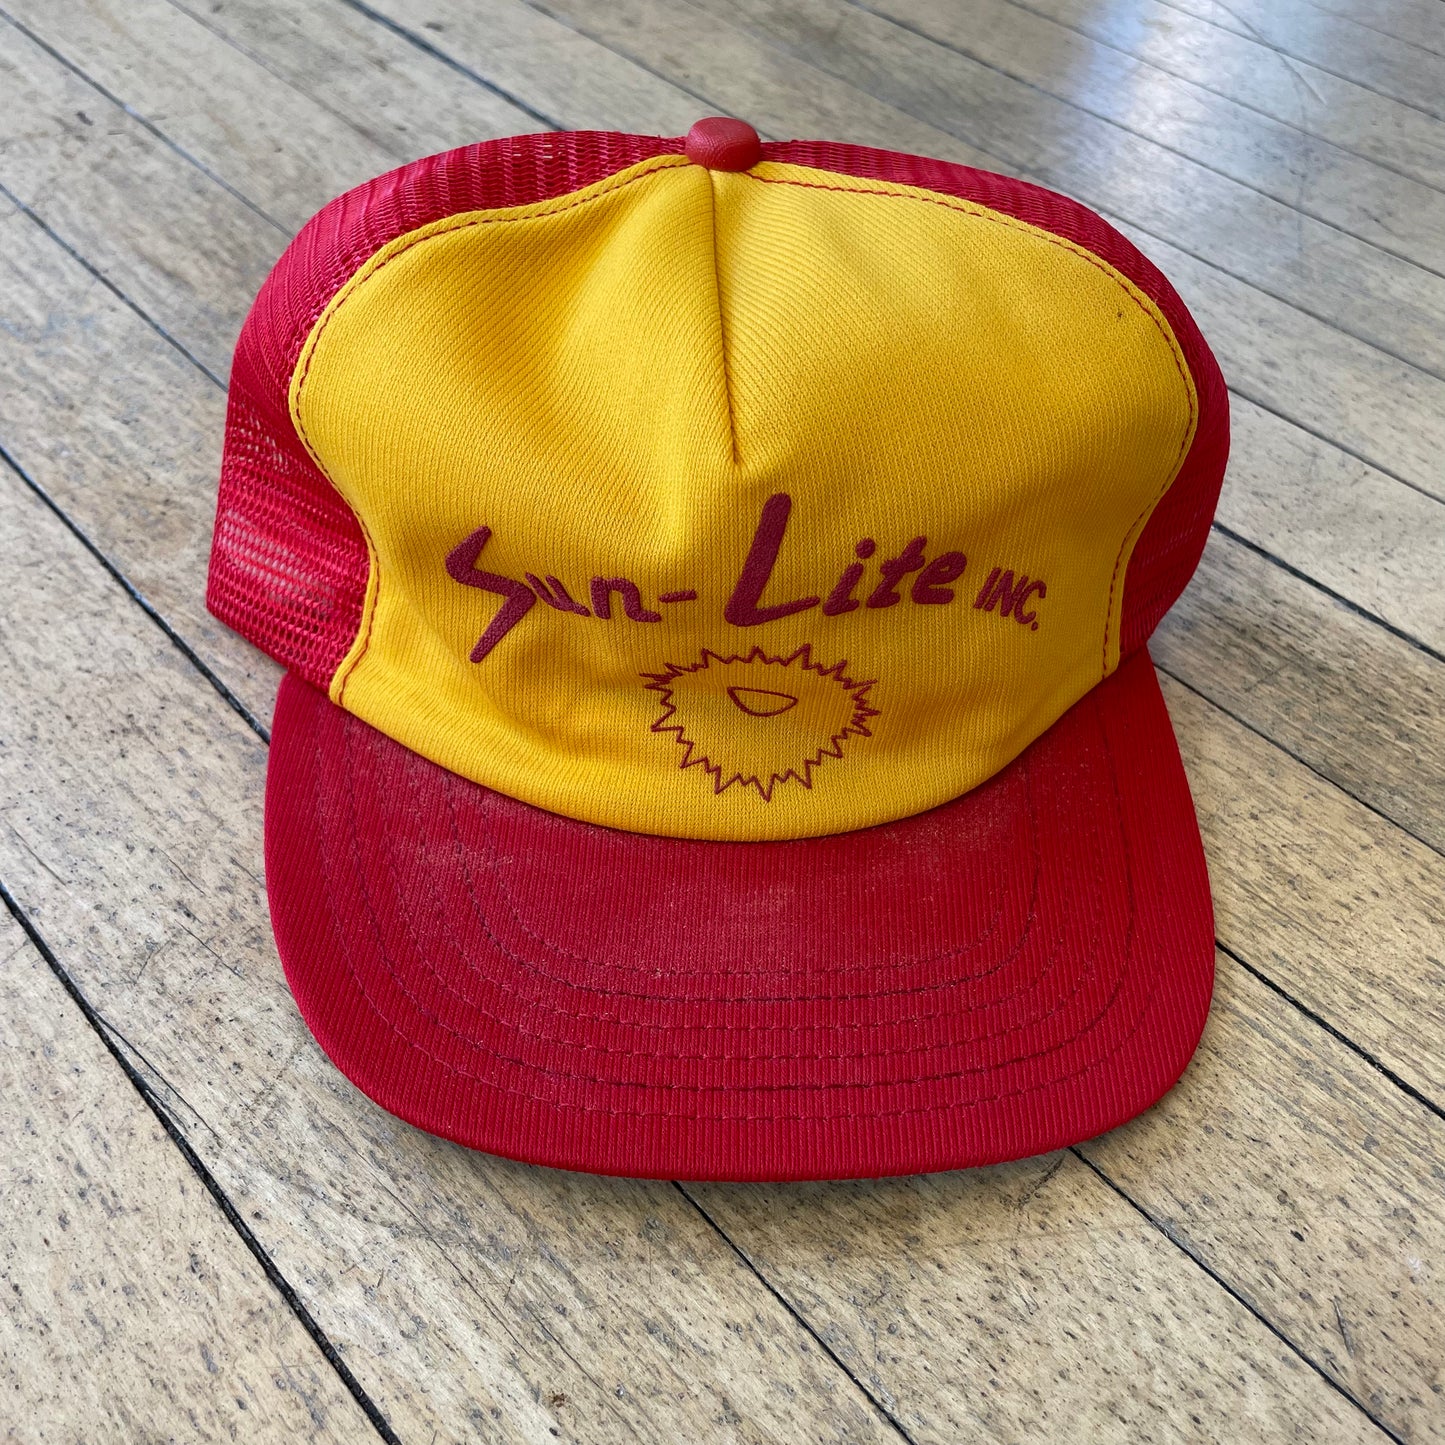 80s Sun Lite Inc Snapback Hat